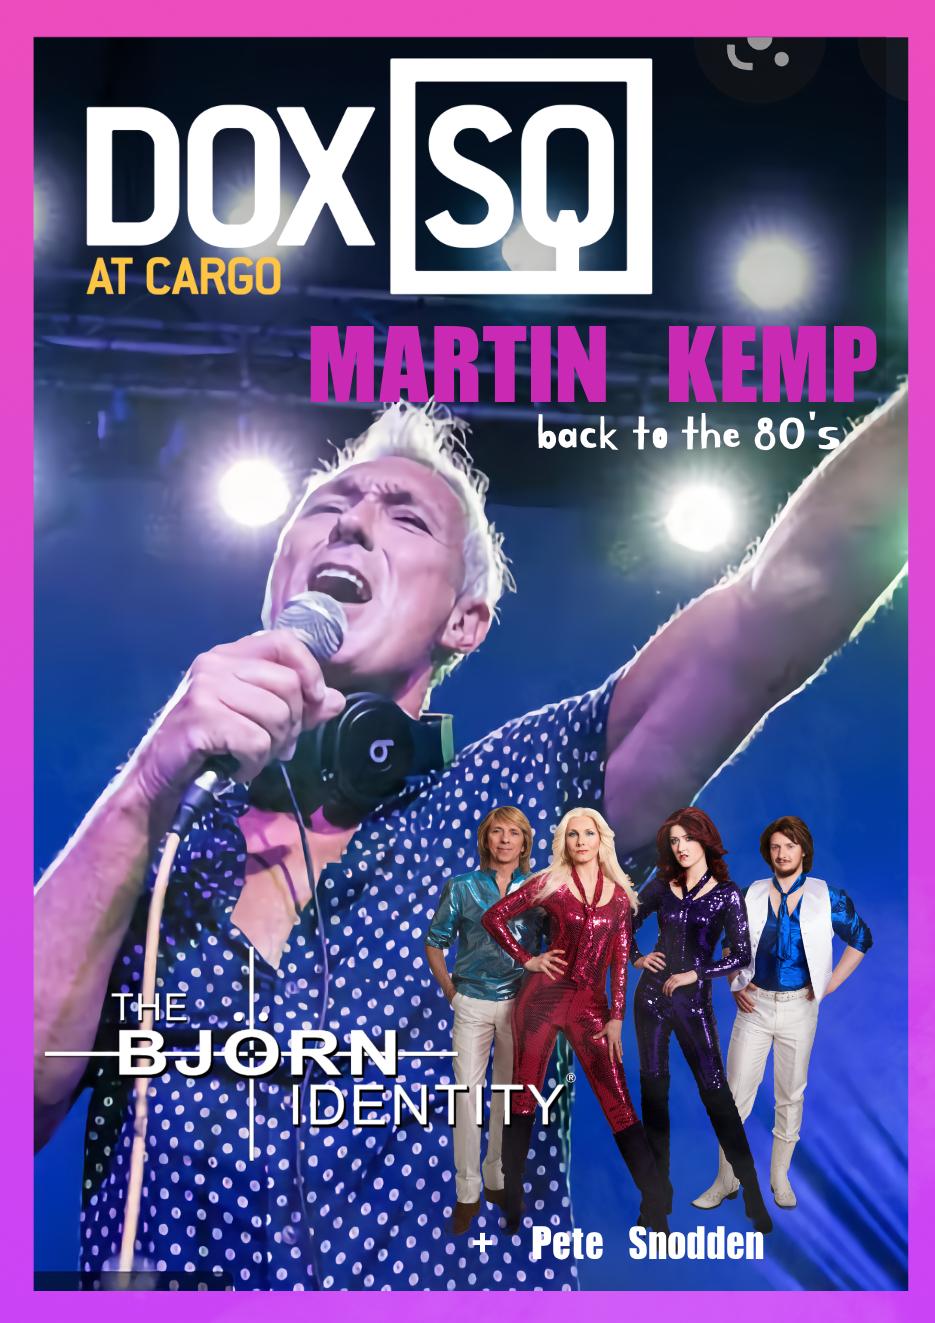 ABBA tribute The Bjorn Identity supports Martin Kemp